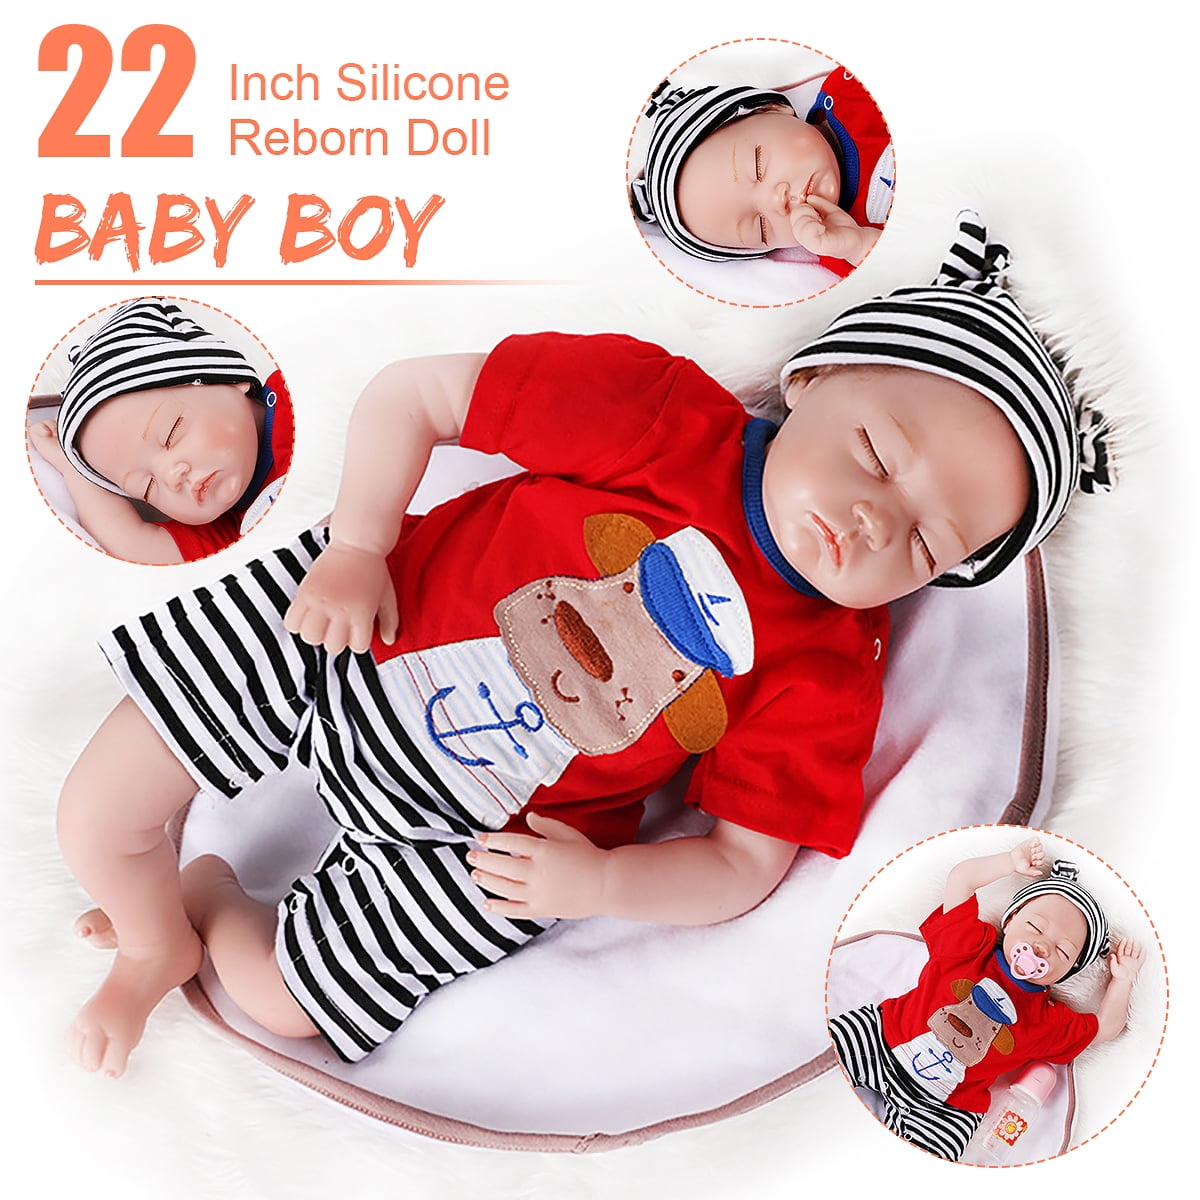 Full Silicone Reborn Soft Vinyl 22" Baby Doll Lifelike Dolls for Girl Boy Kids 